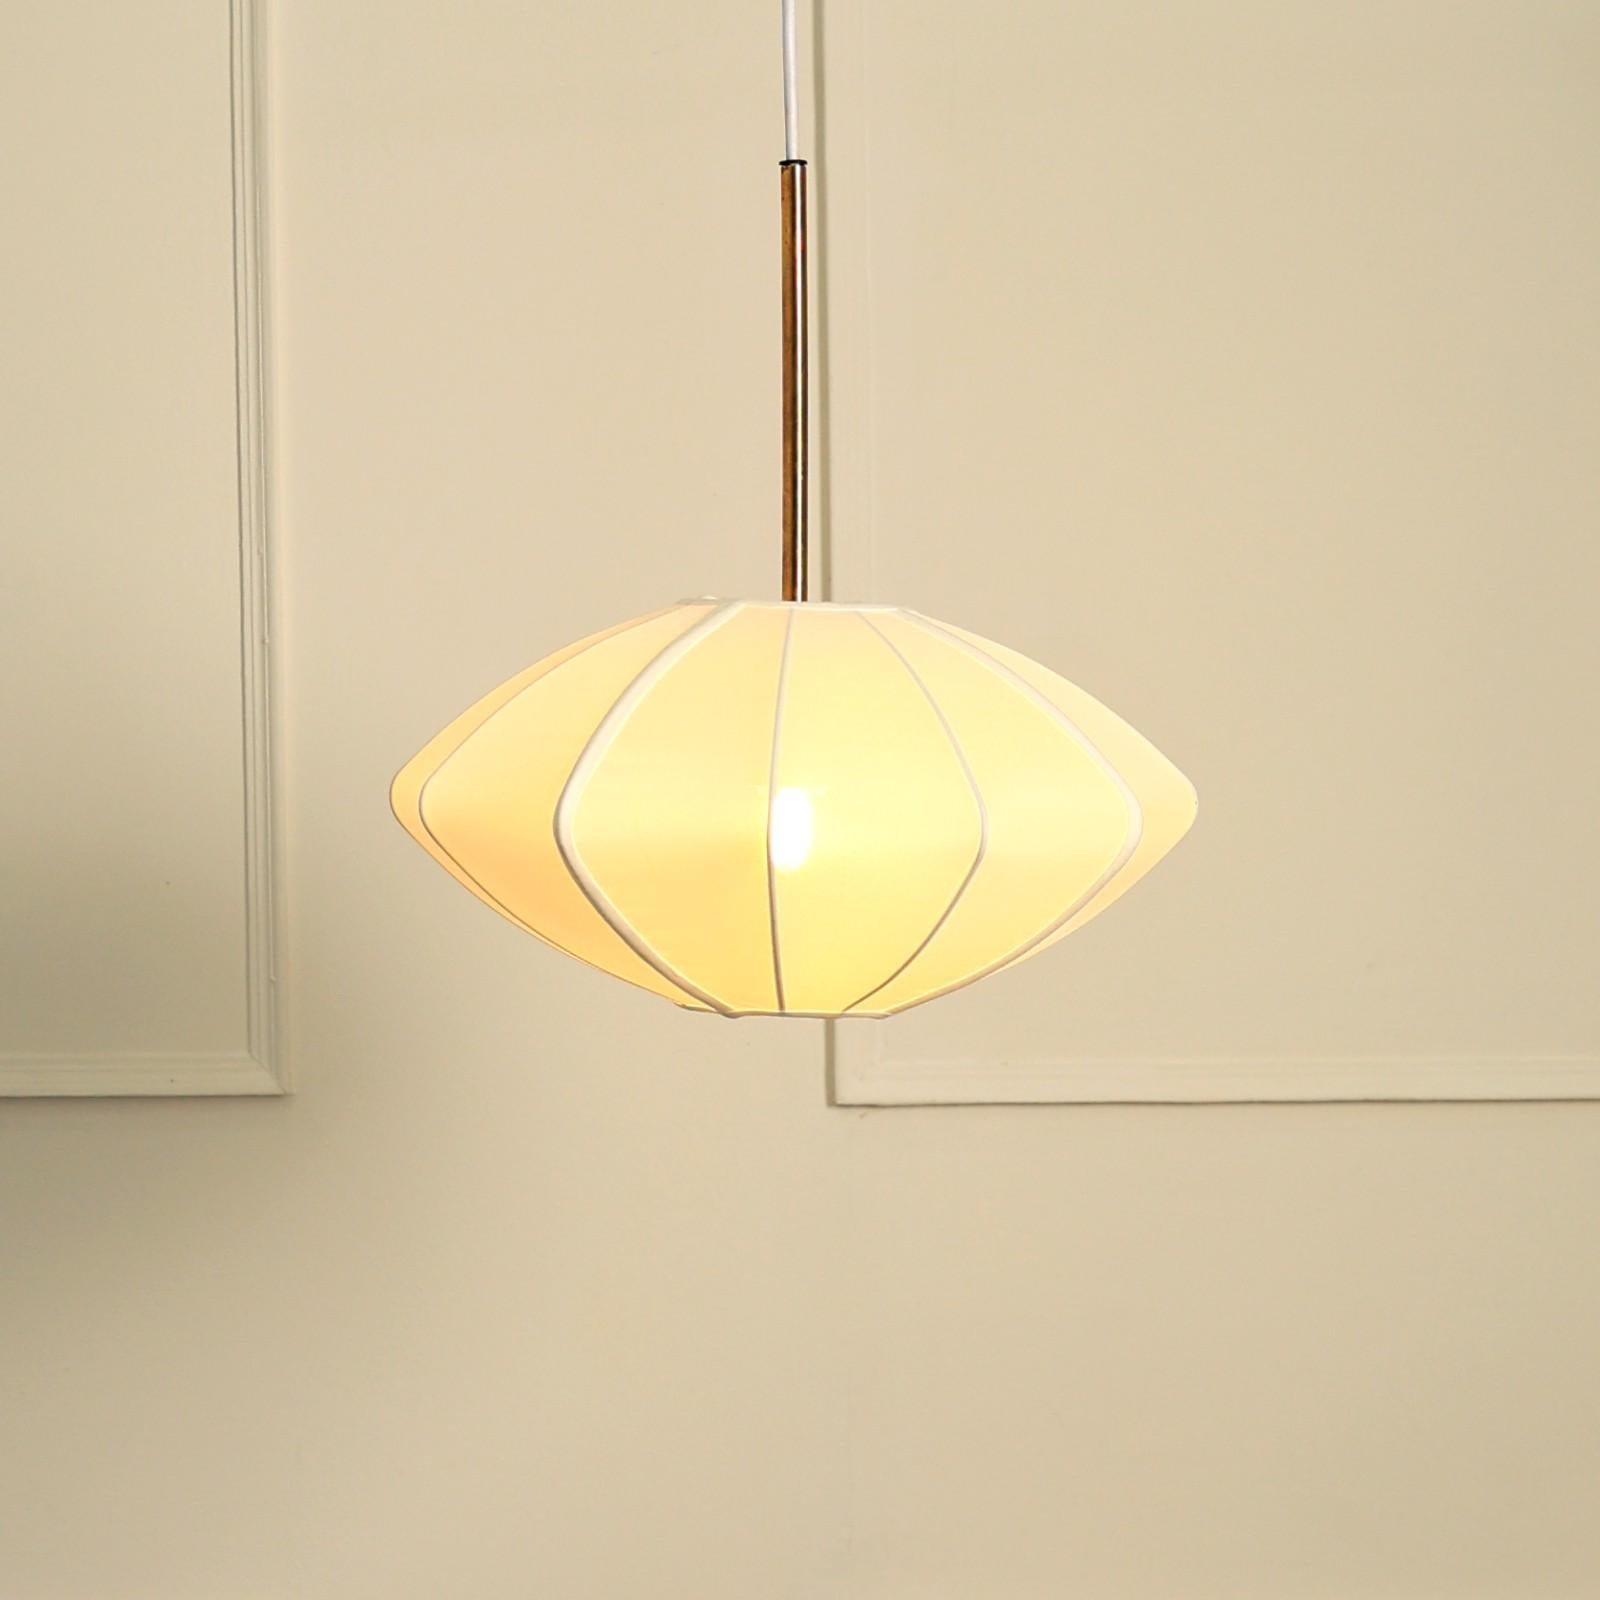 Luxe Collection - Tokyo Lamp  - Premium Chiffon Fabric, Metallic Spacer, Soft Warm Glow, Mood Enhancement Lighting